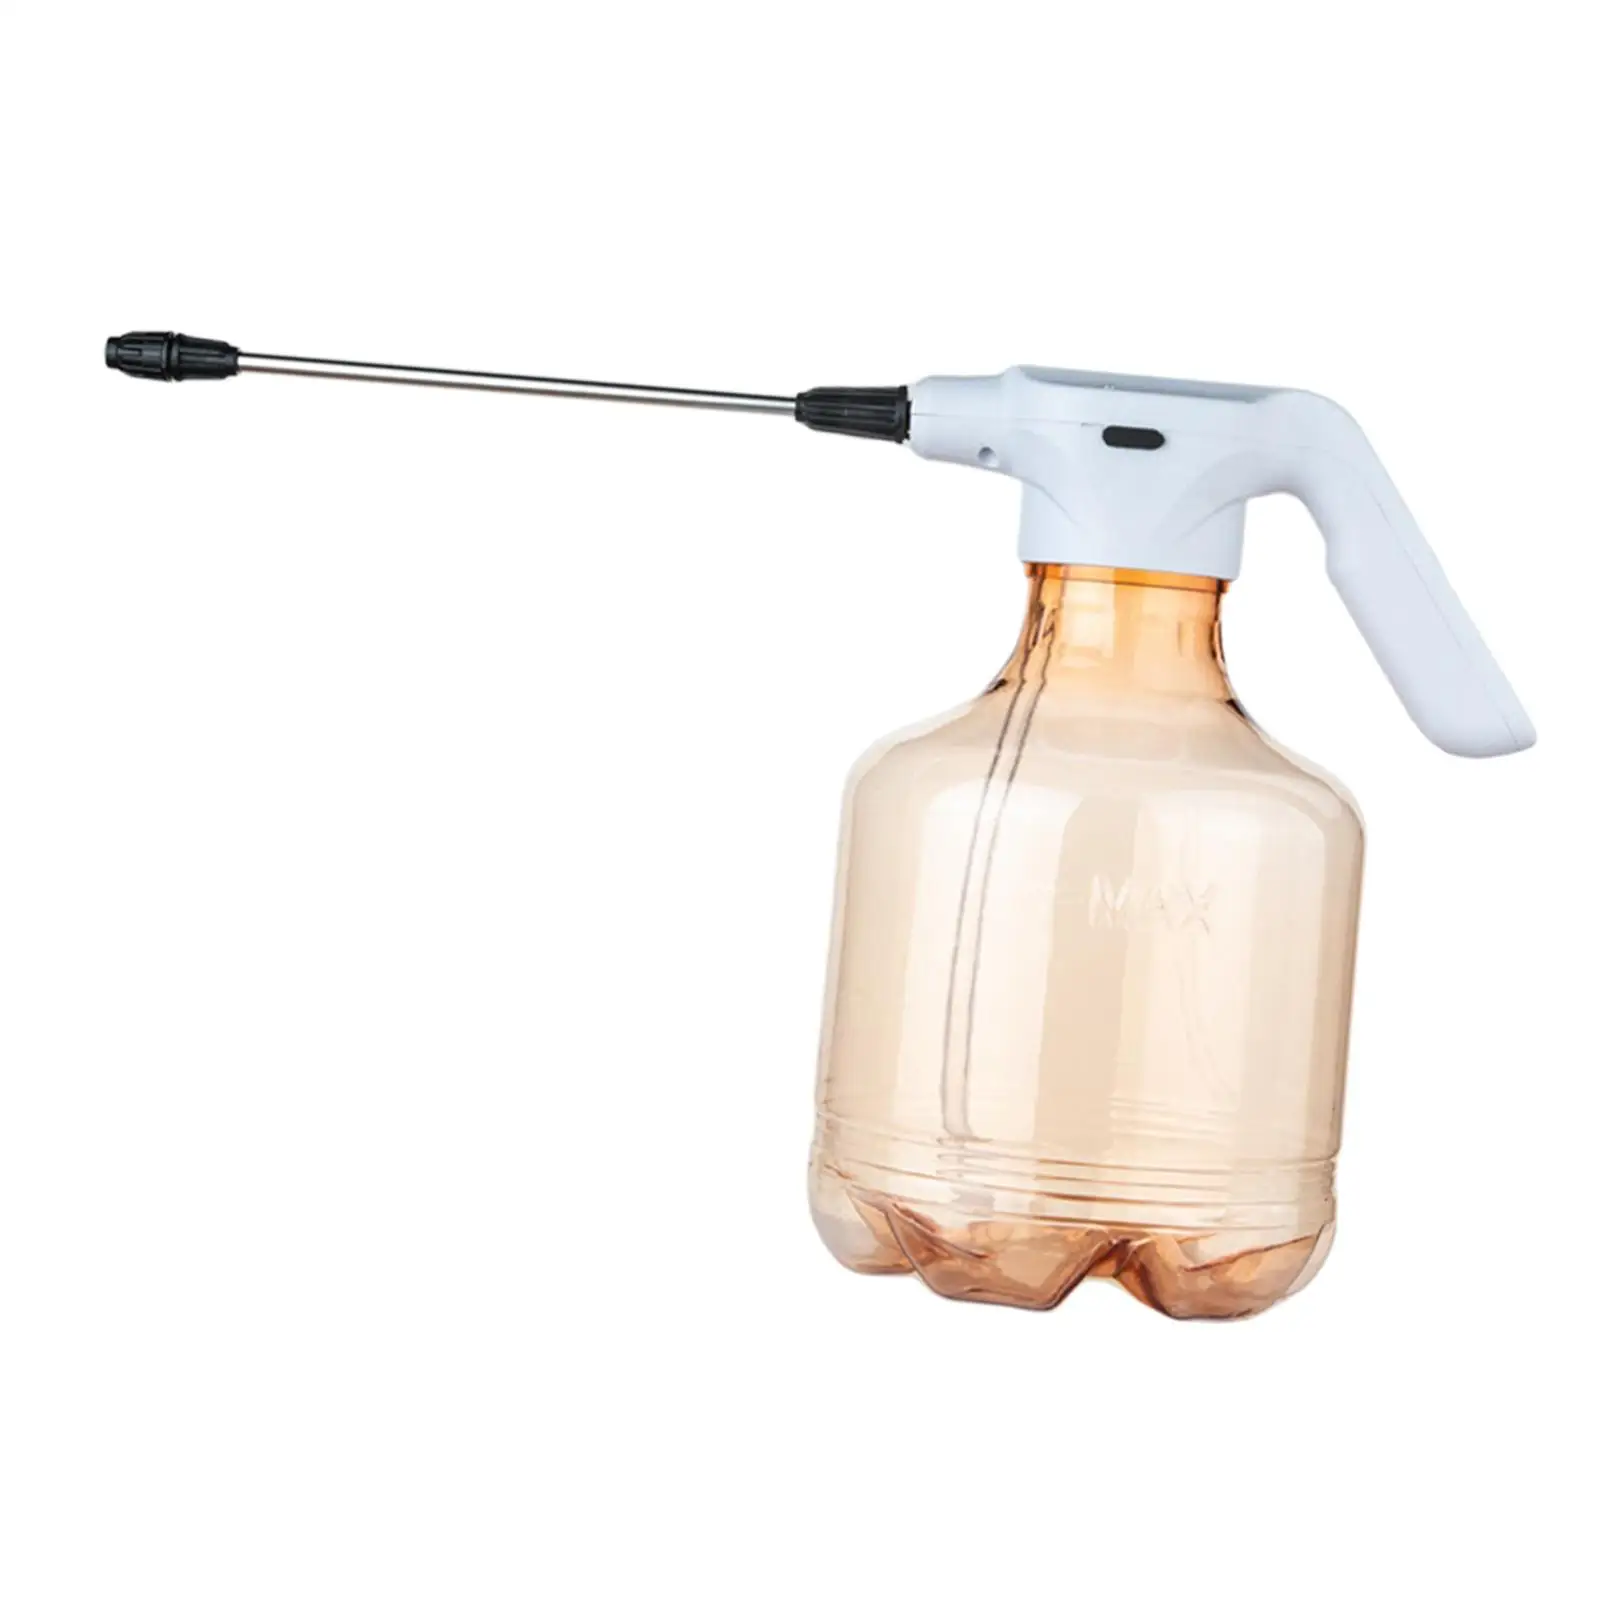 Automatic Garden Watering Mist Sprayer Household Cleaning 3L Adjustable Spout Mist Spray Bottle USB Electric Planter Sprayer